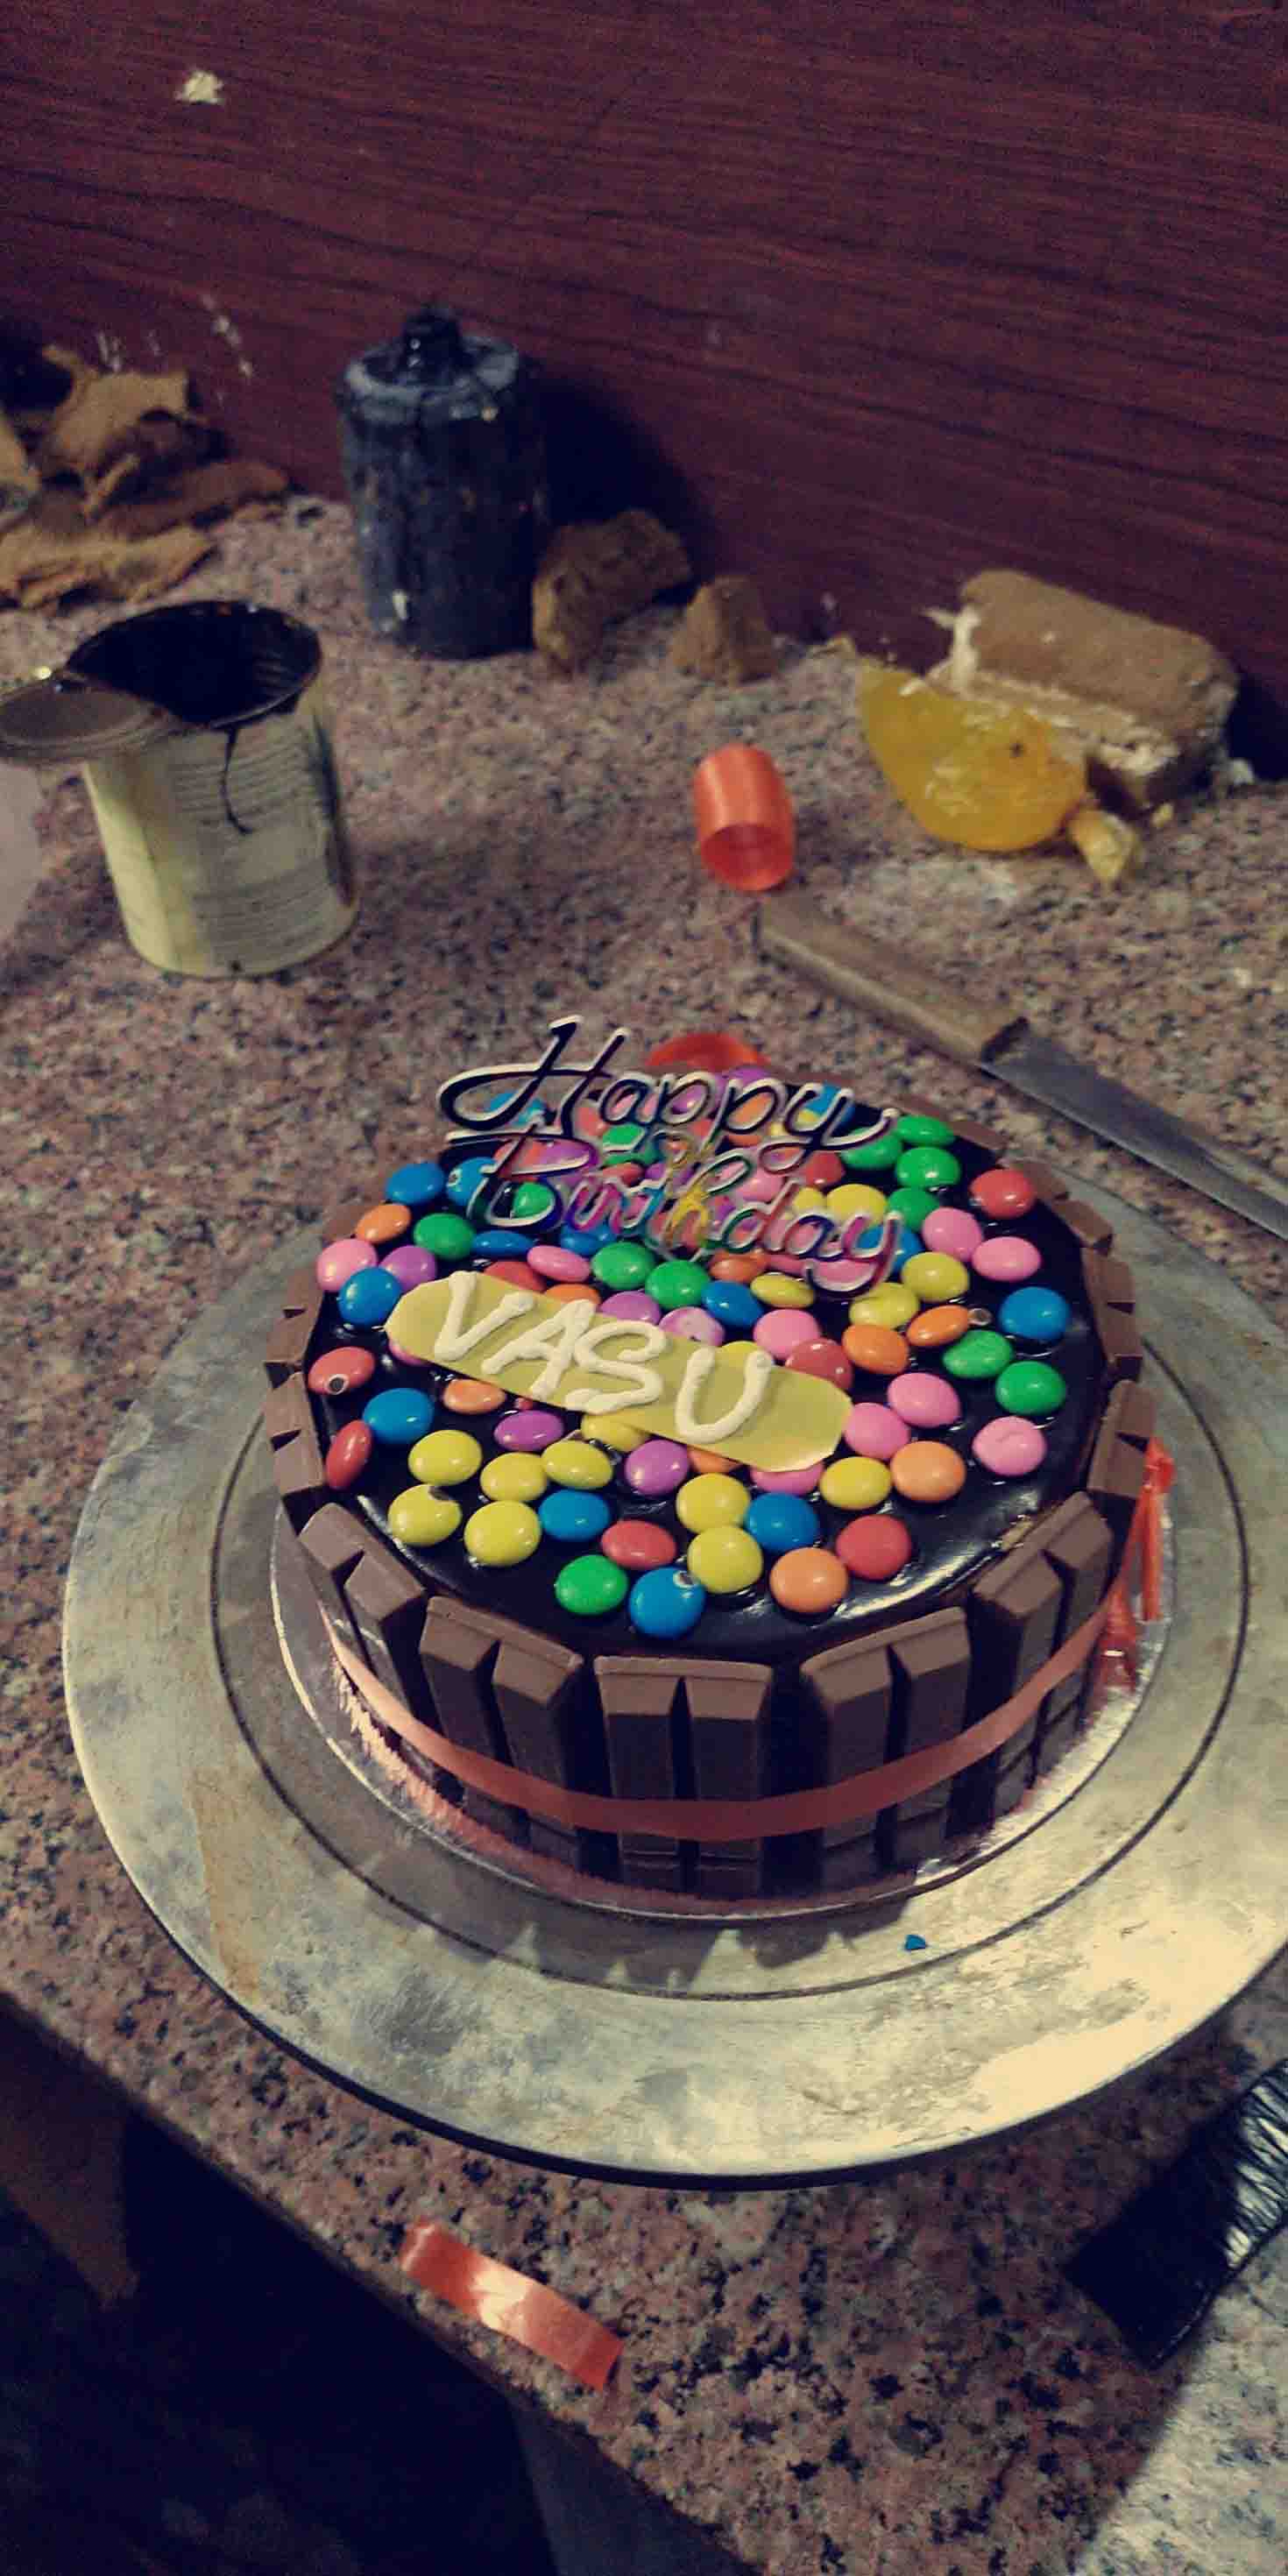 100+ HD Happy Birthday Vasu Cake Images And Shayari